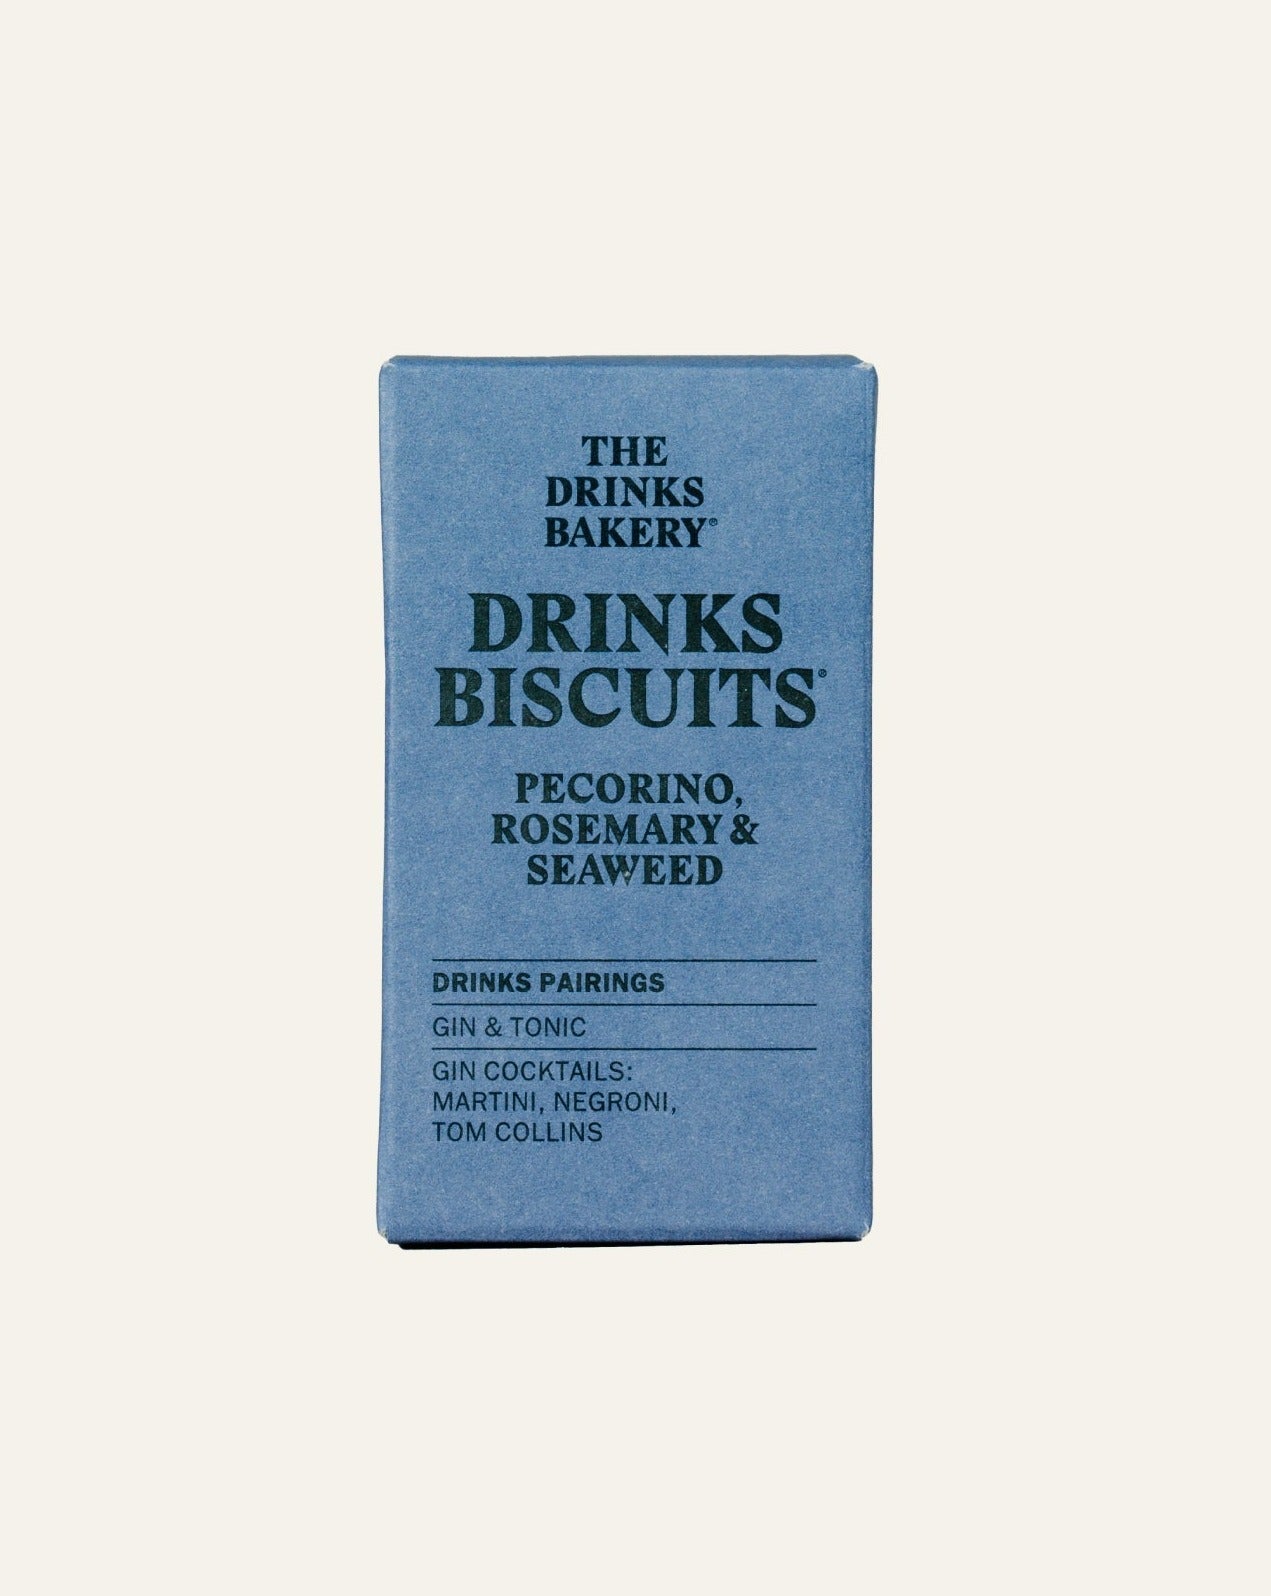 Drink Biscuits - Pecorino, Rosemary & Seaweed - Hidden Scotland